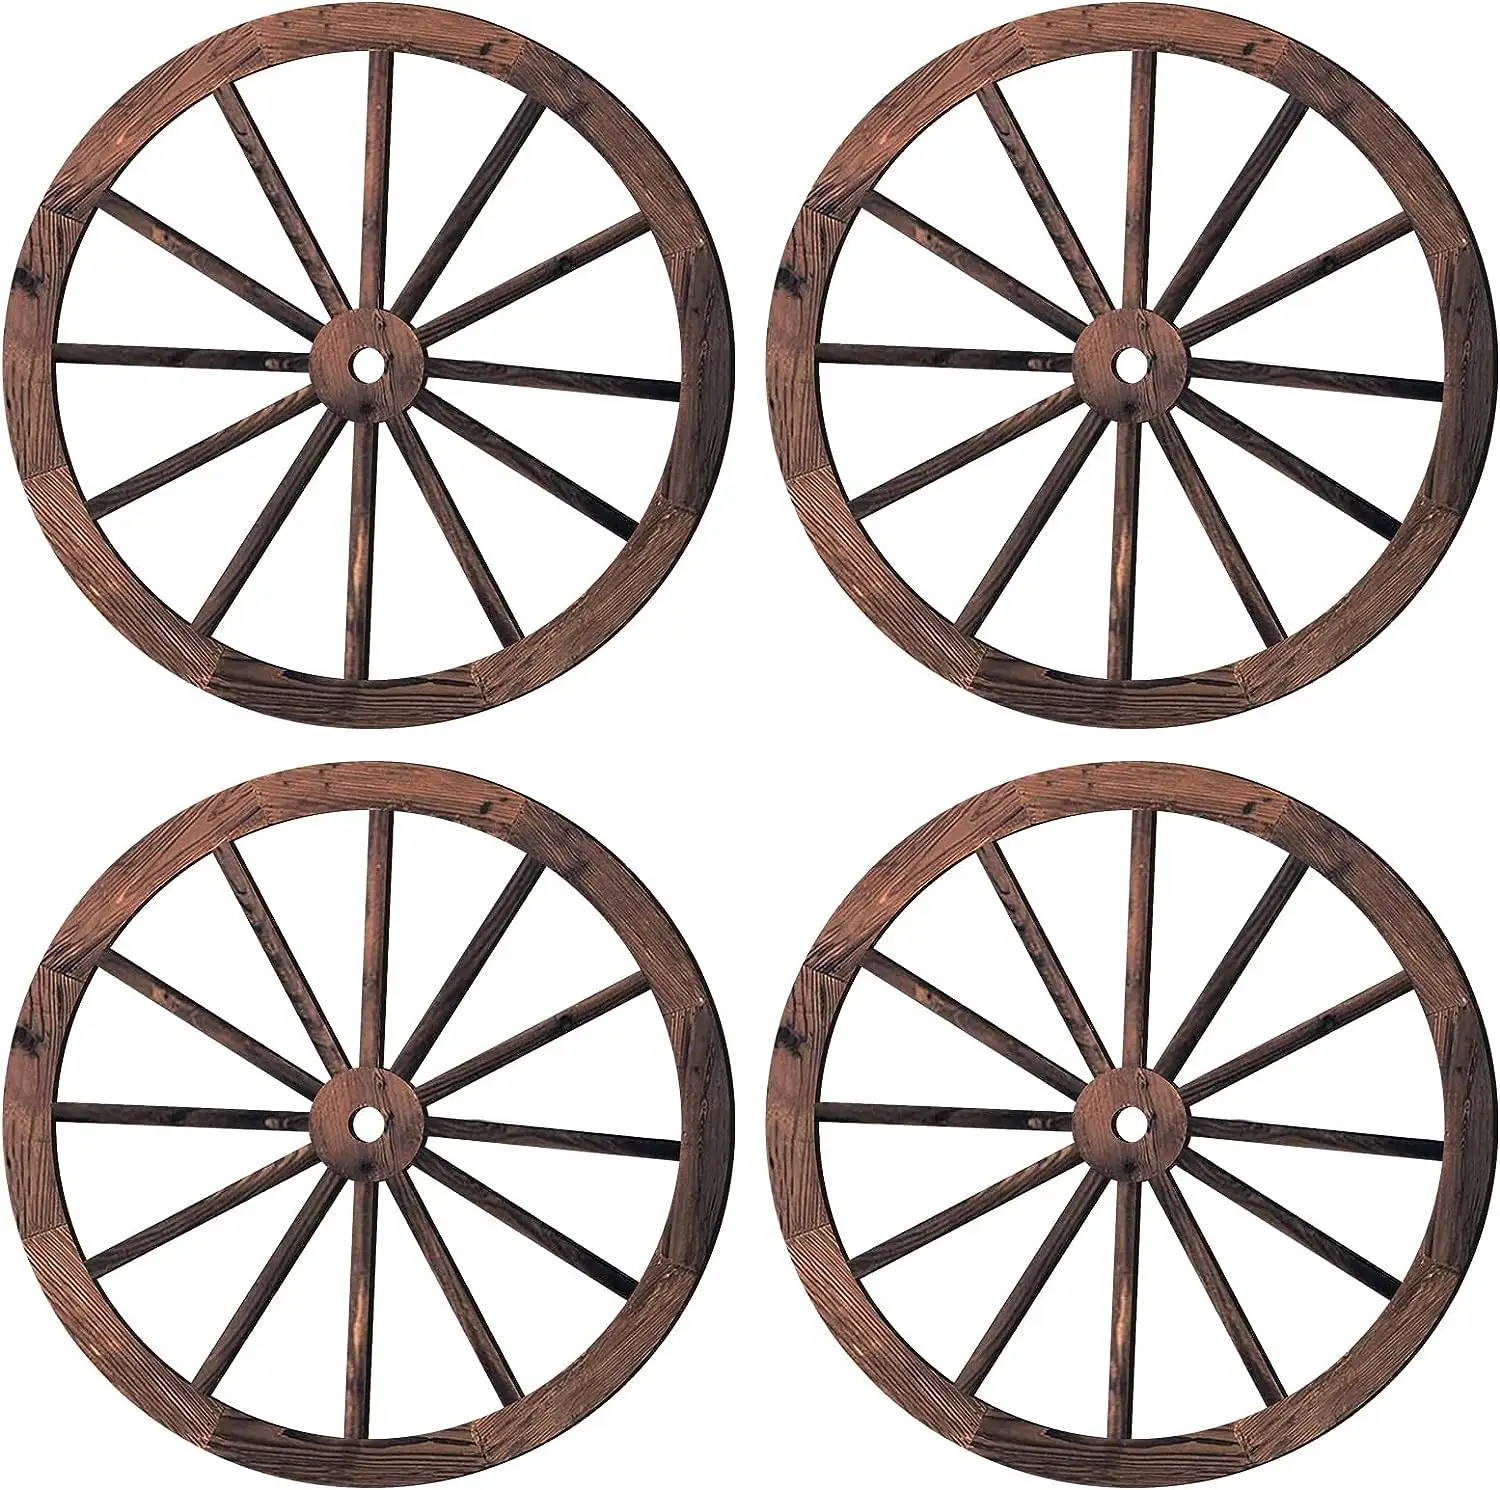 Wall Art Farmhouse Wagon Wheels Rustic Yard Decor 4 Pieces Wood Wagon Wheel Wall Decor 10 Inches Wooden Wagon Wheel for home